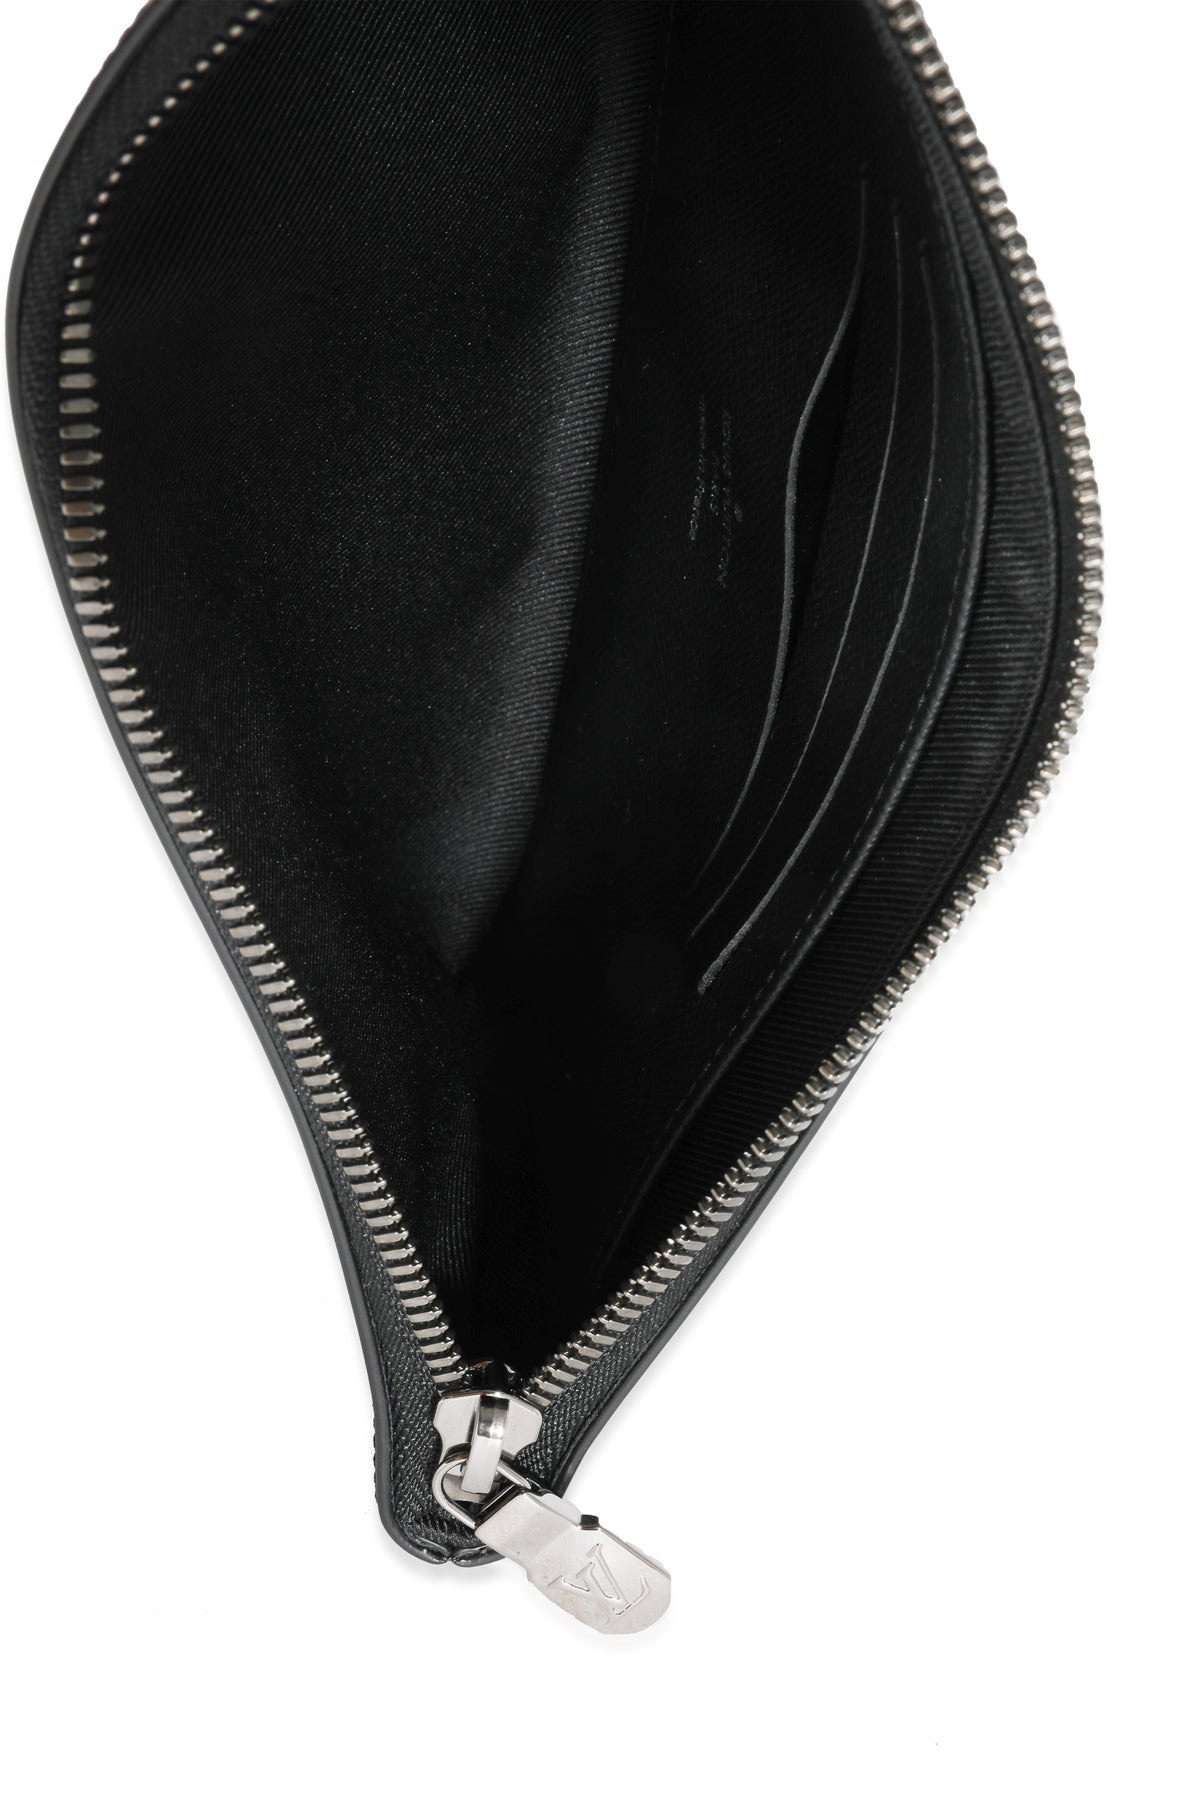 Louis Vuitton Discovery Pochette PM Monogram Pouch black